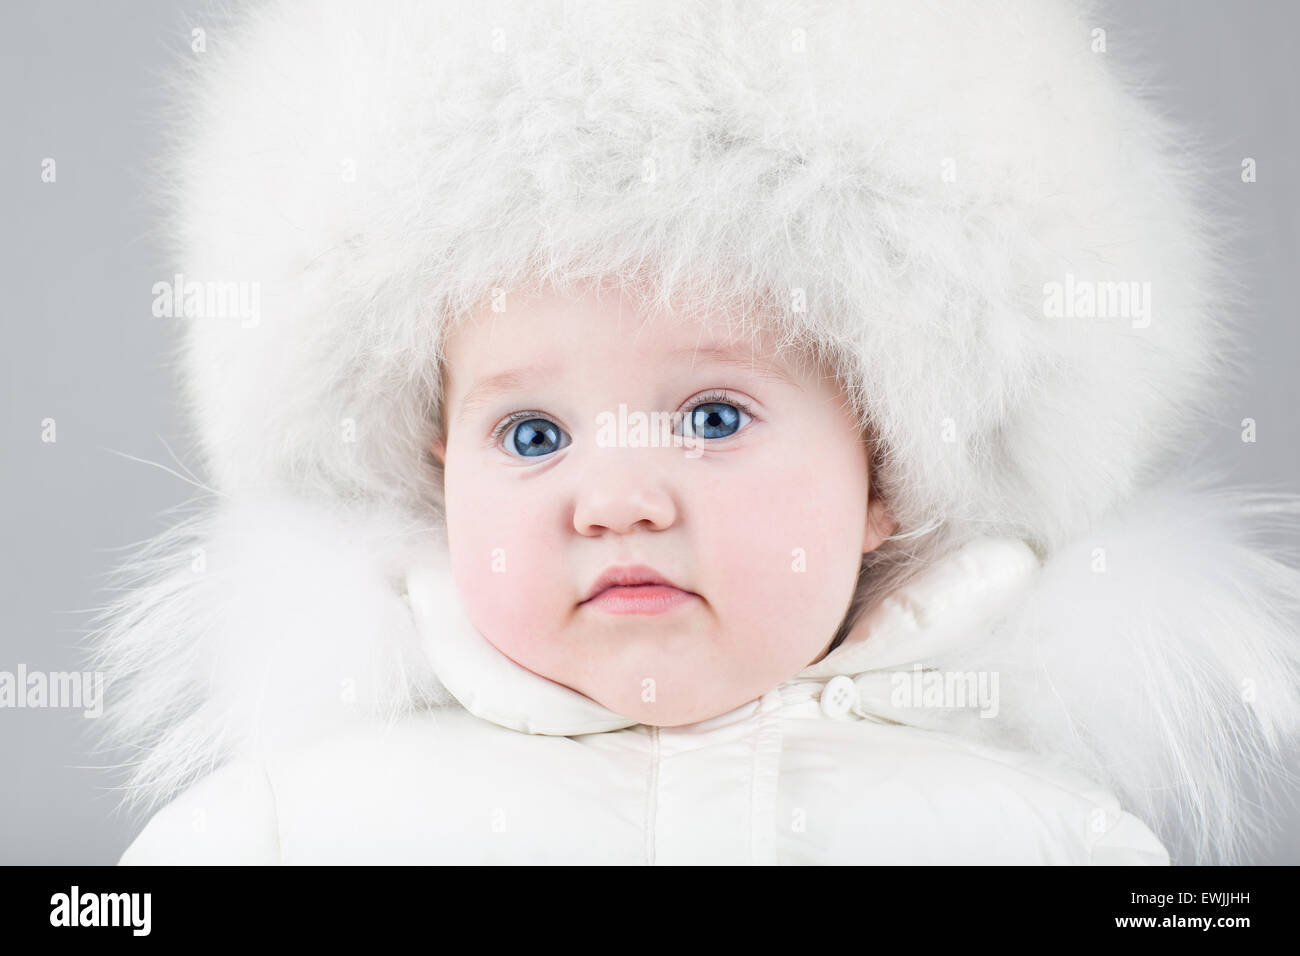 russian baby fur hat